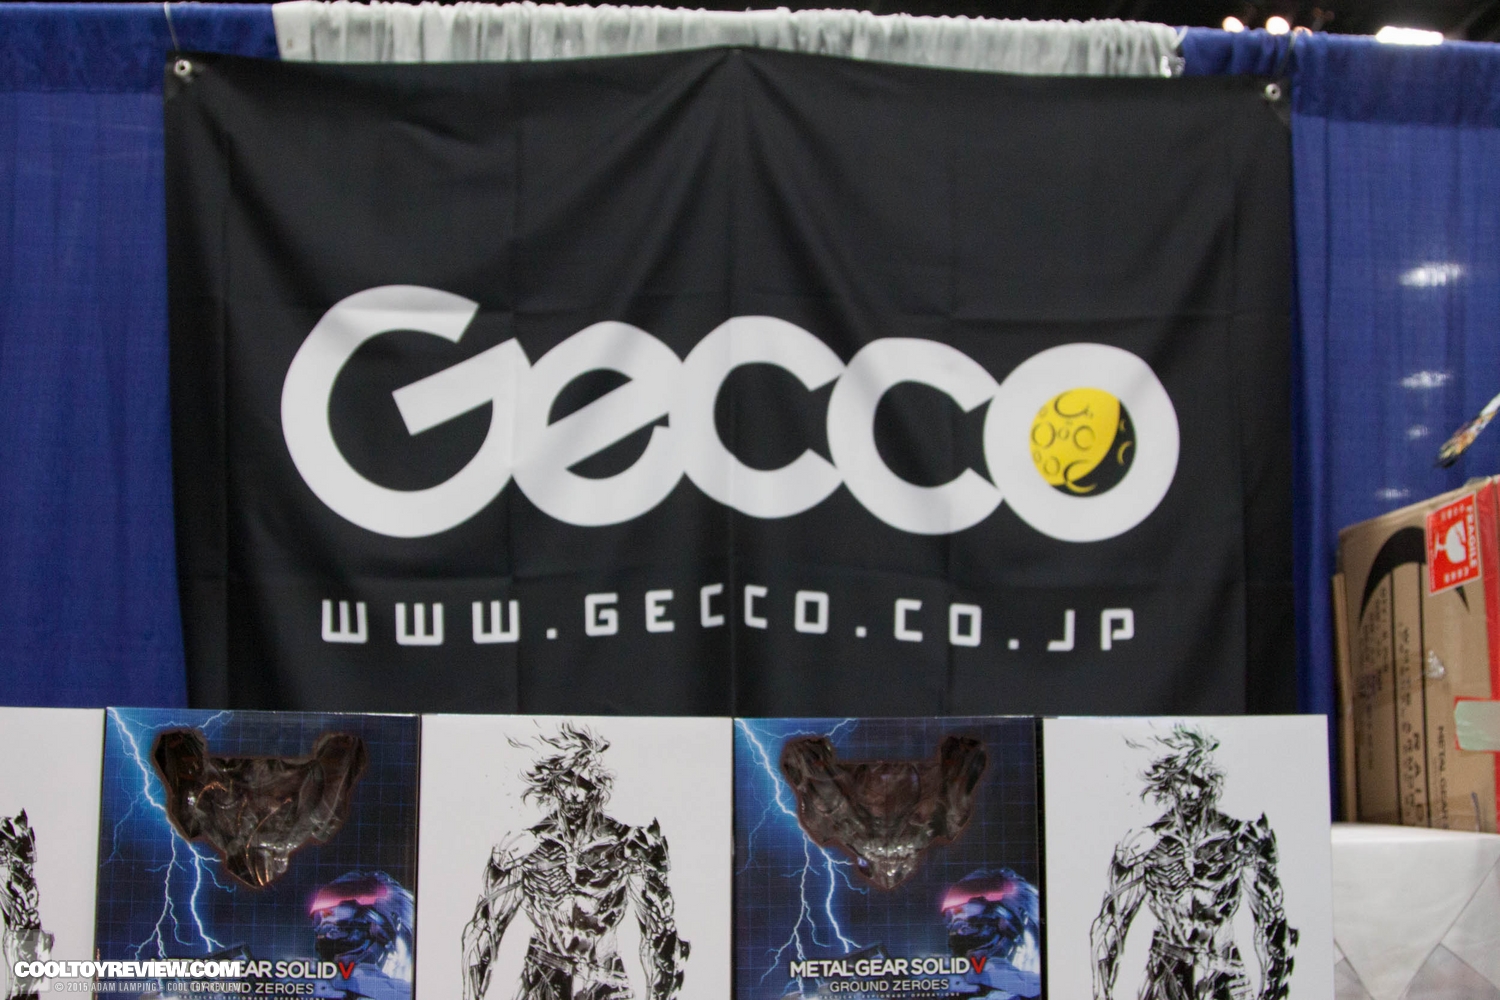 san-diego-comic-con-2015-gecco-001.jpg